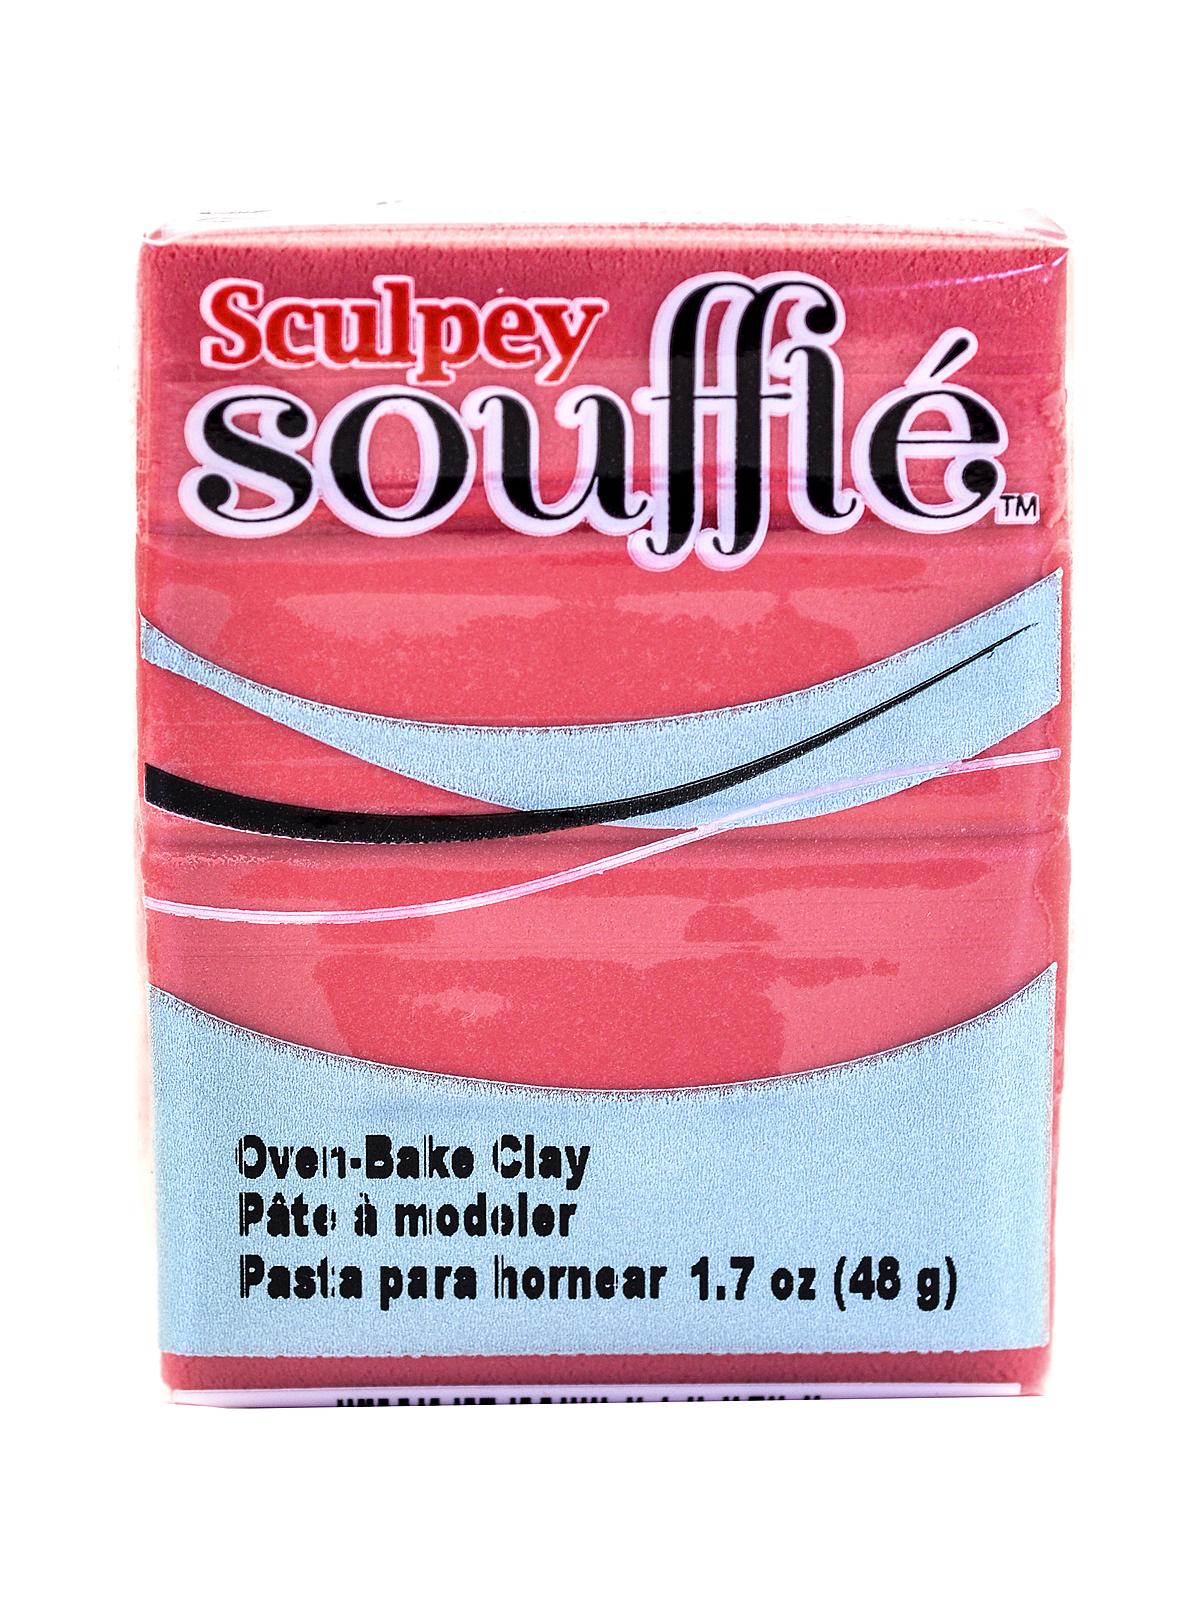 Soufflé Oven-bake Clay Mai Tai 1.7 Oz.